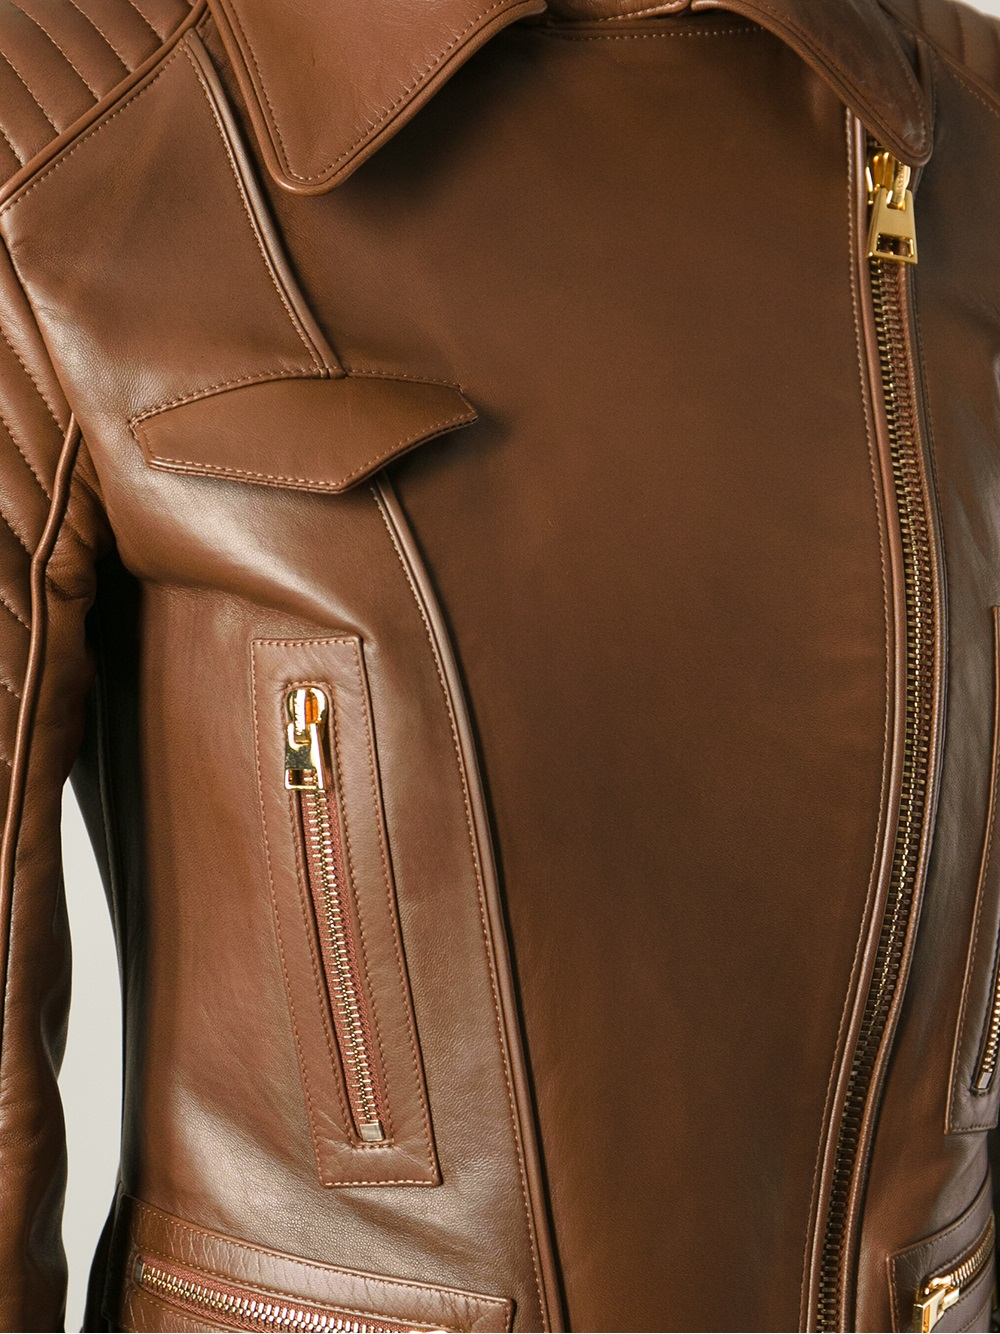 Tom Ford Wide Collar Biker Jacket in Brown - Lyst